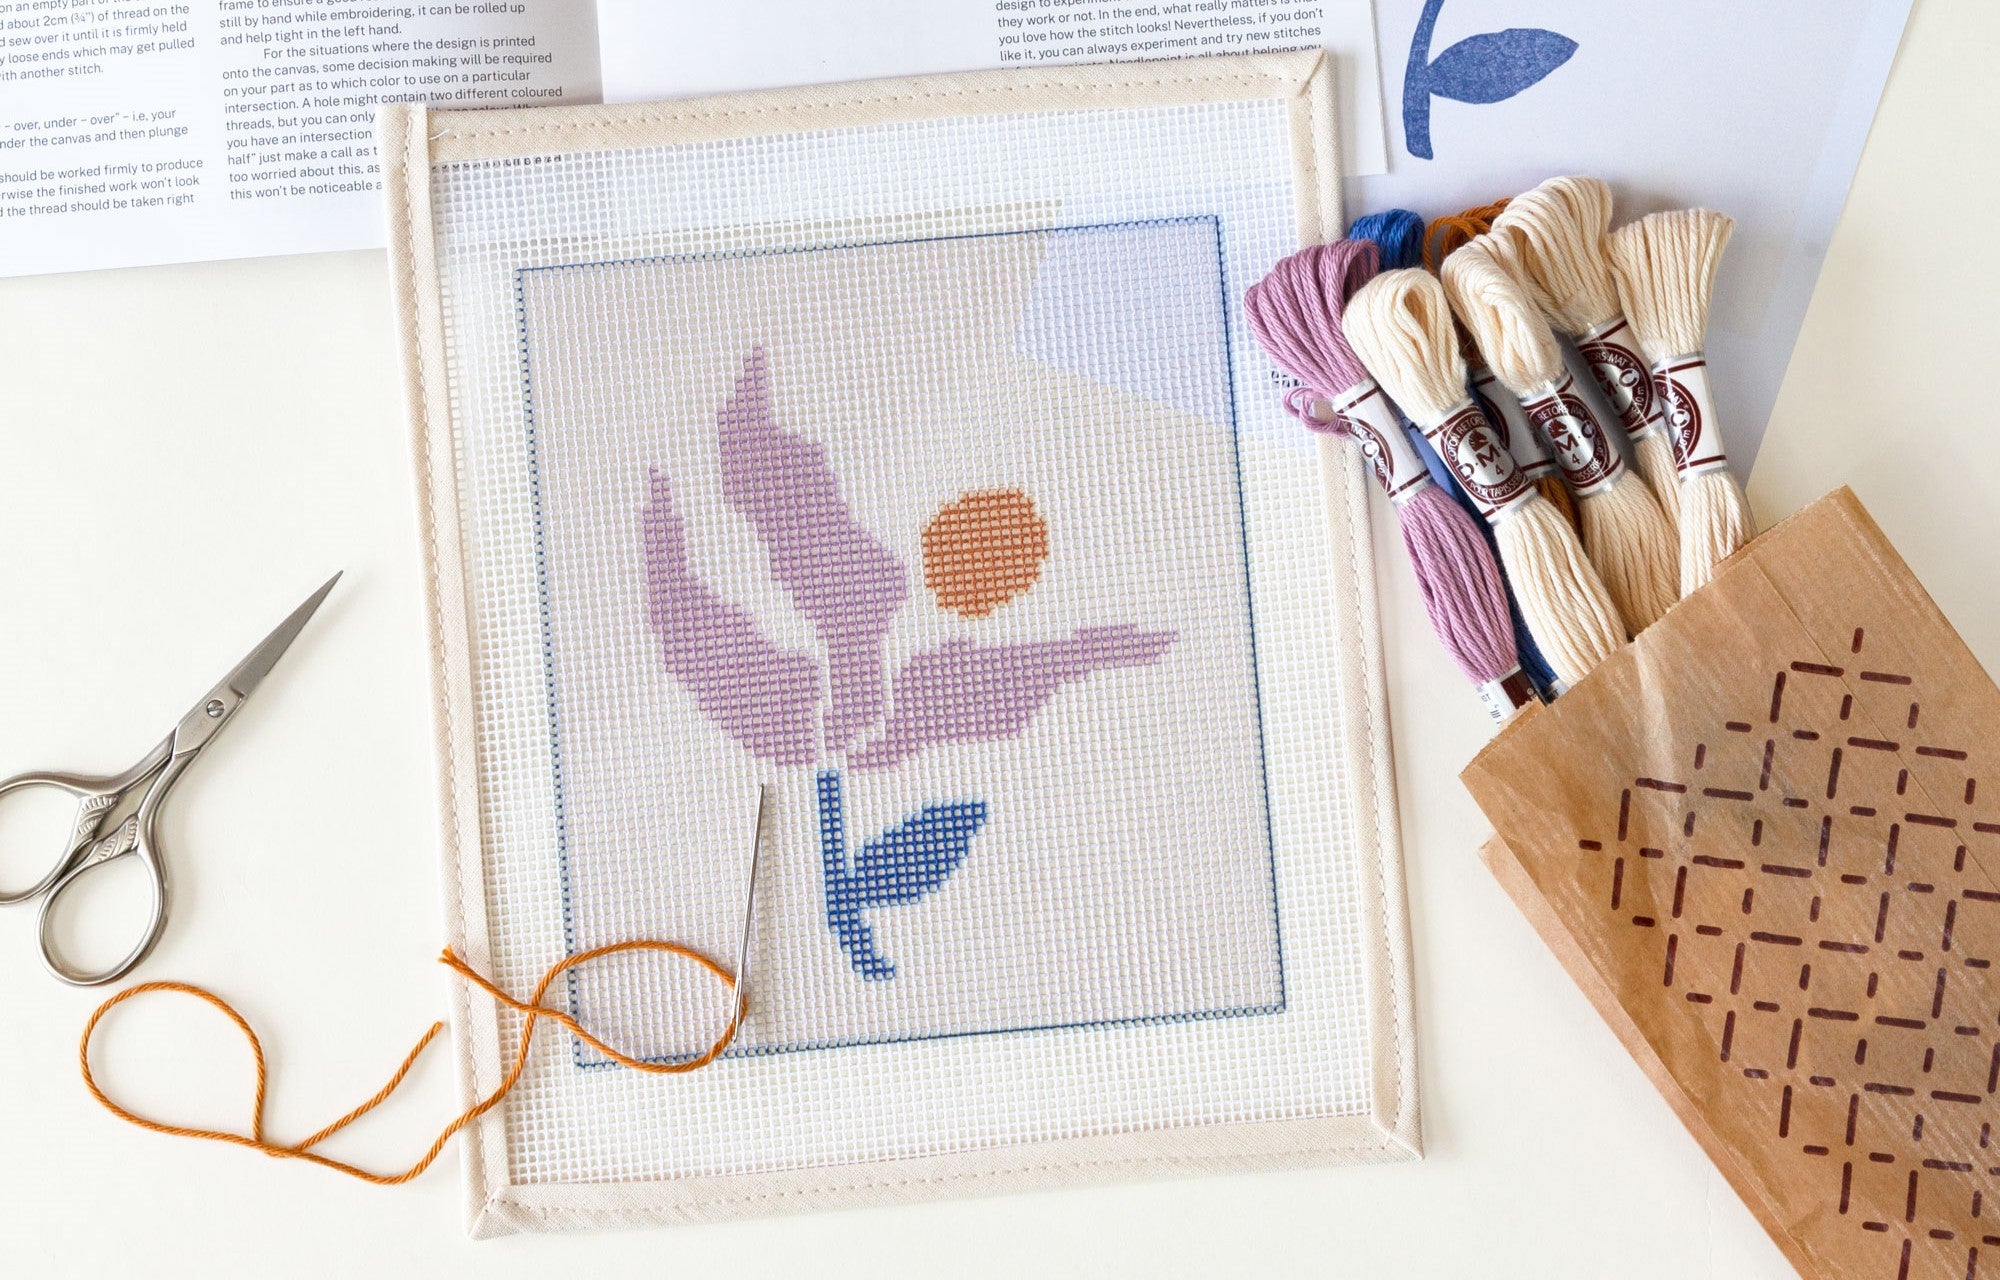 Needlepoint Simply Stitches Book Canvas – Needlepoint Inc